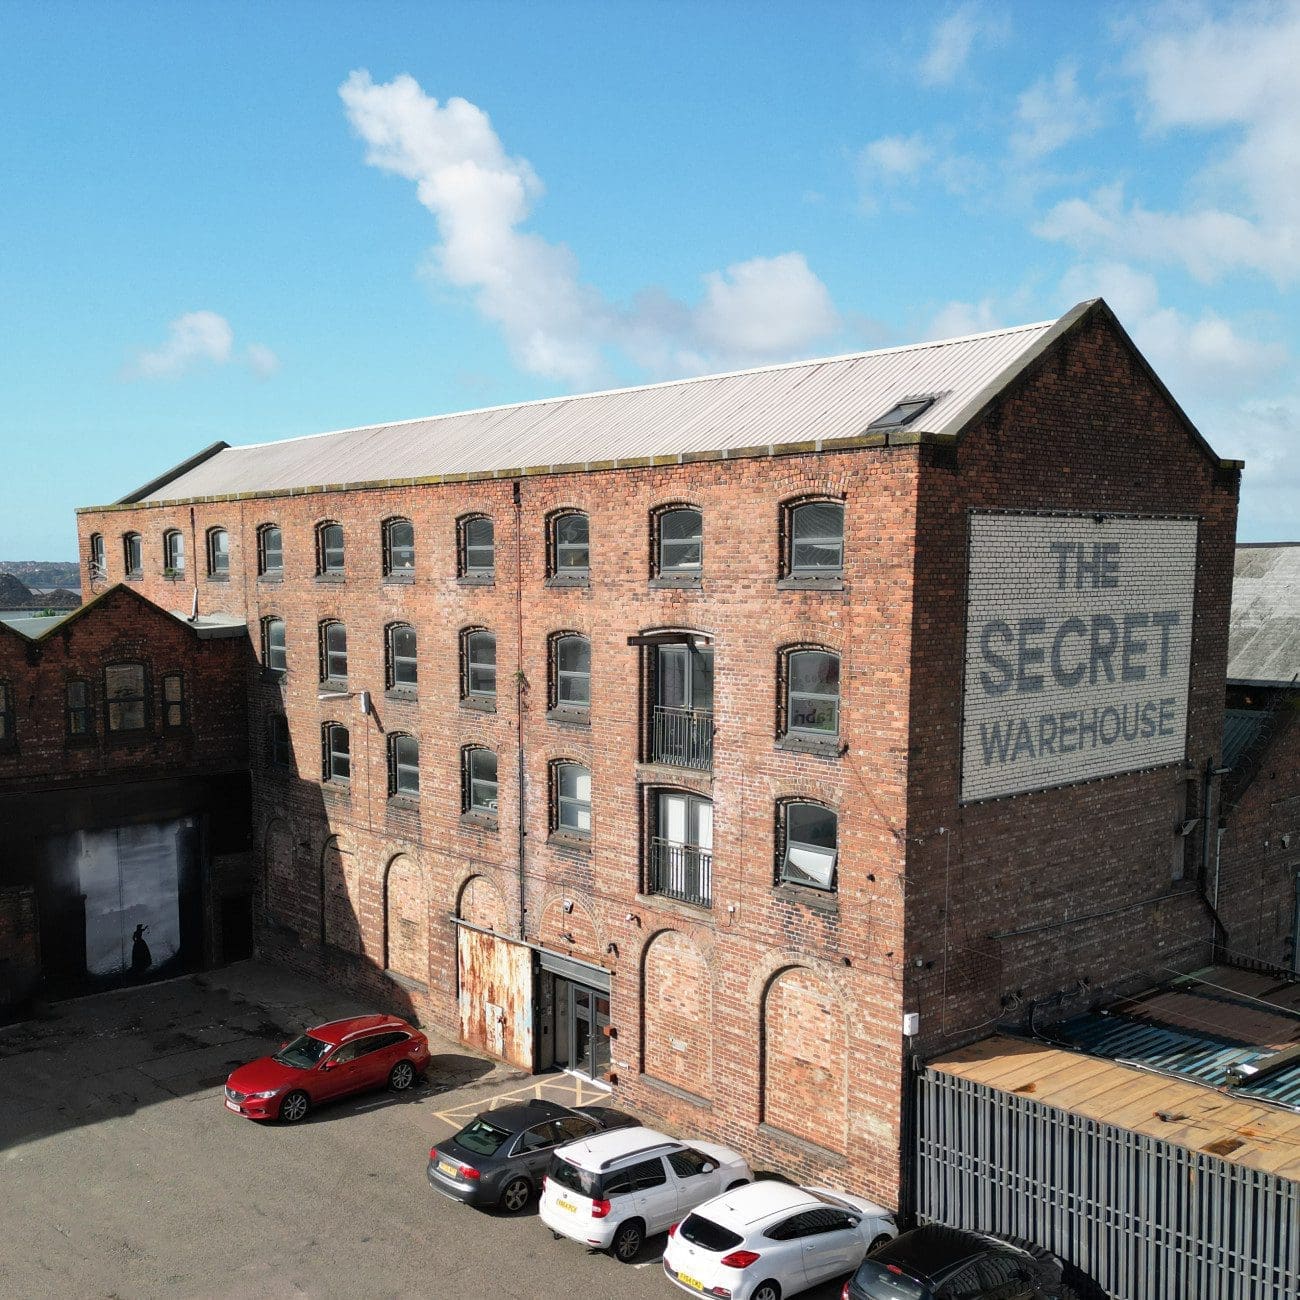 the secret warehouse